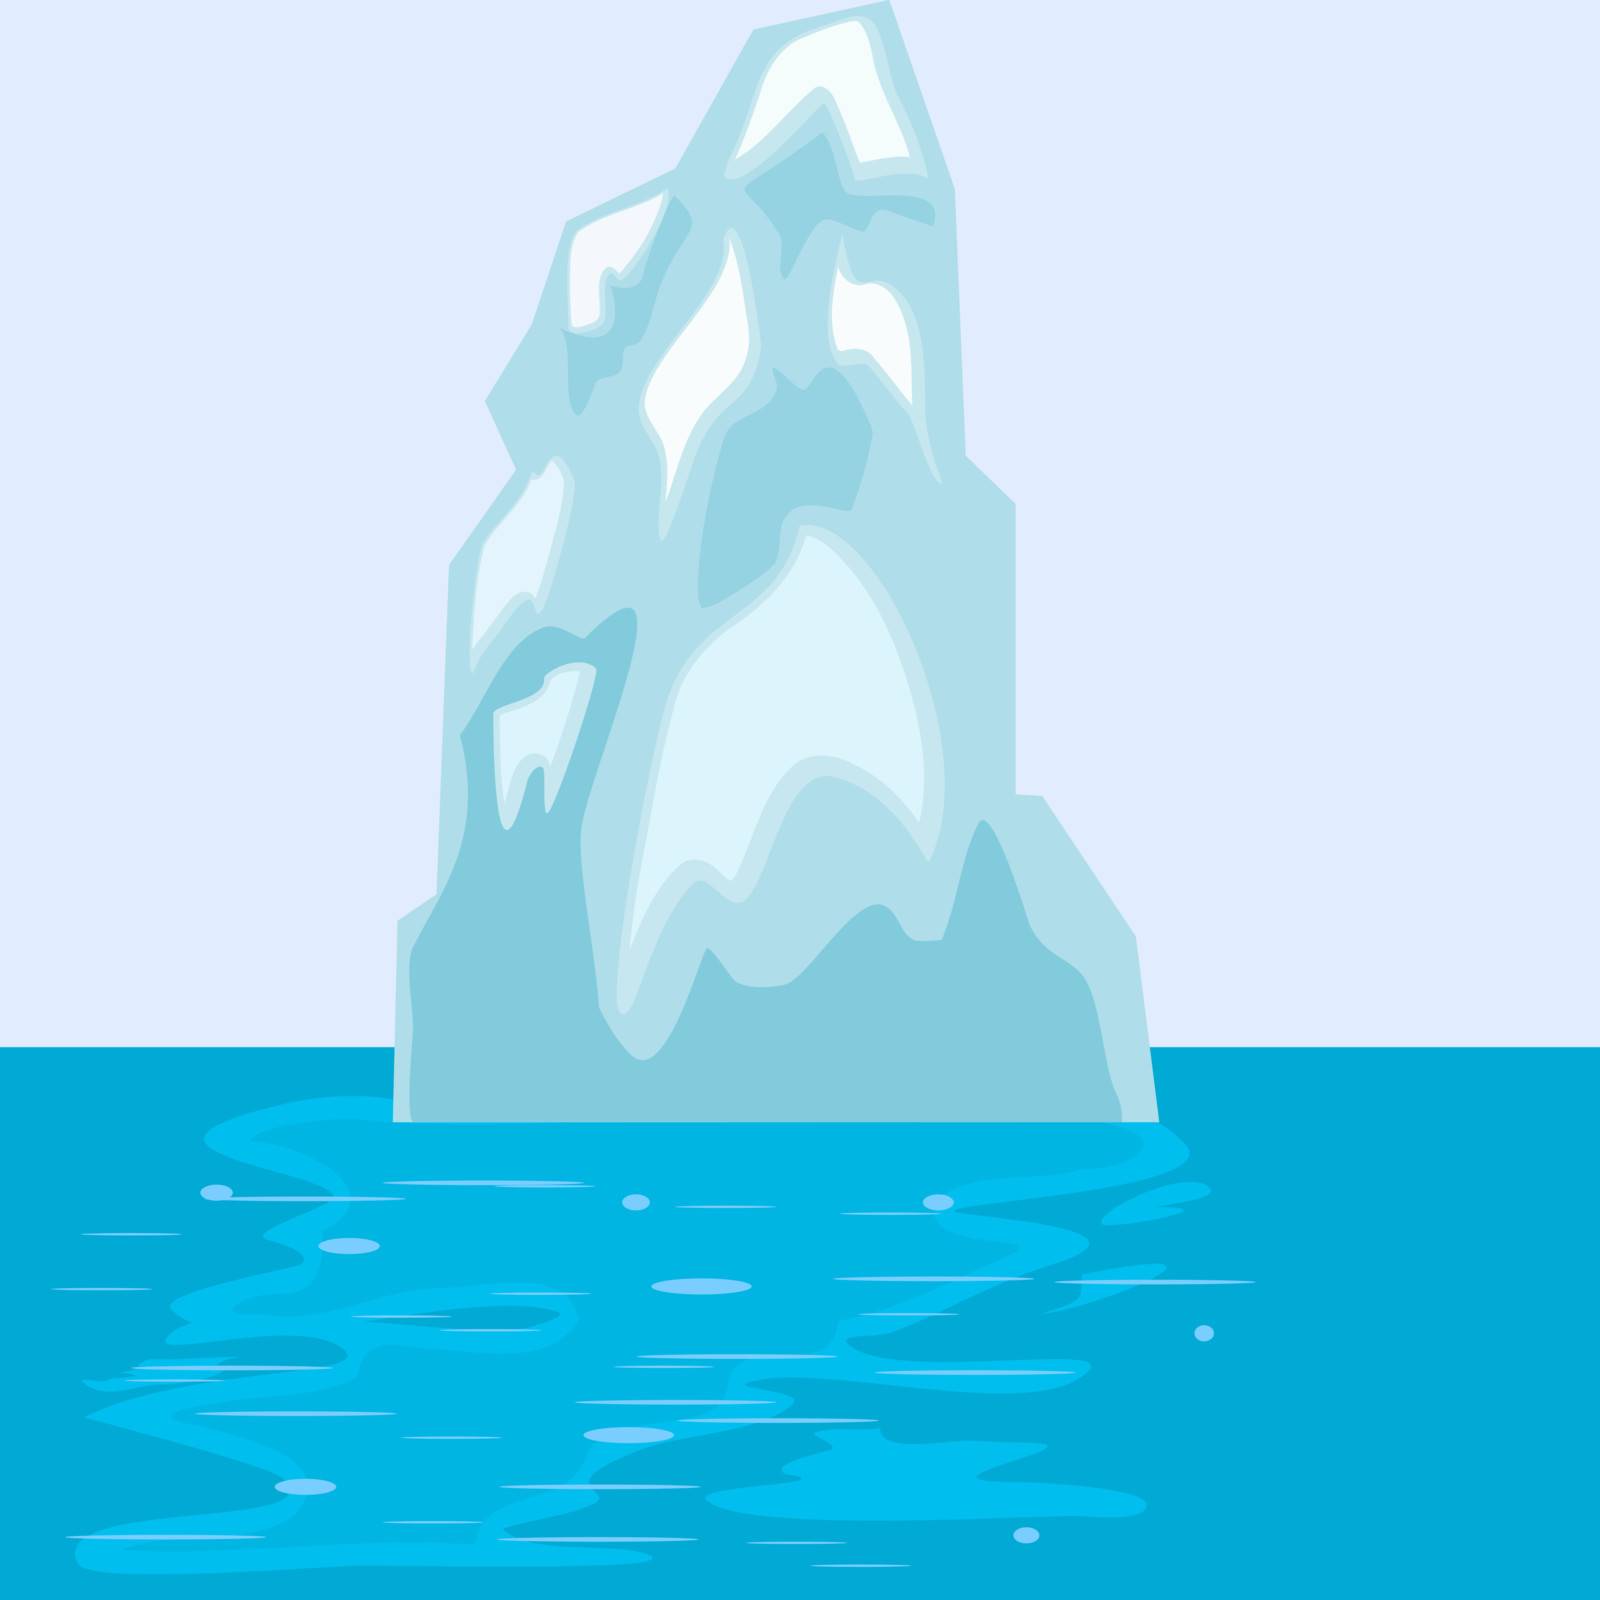 Iceberg in the sea. eps10